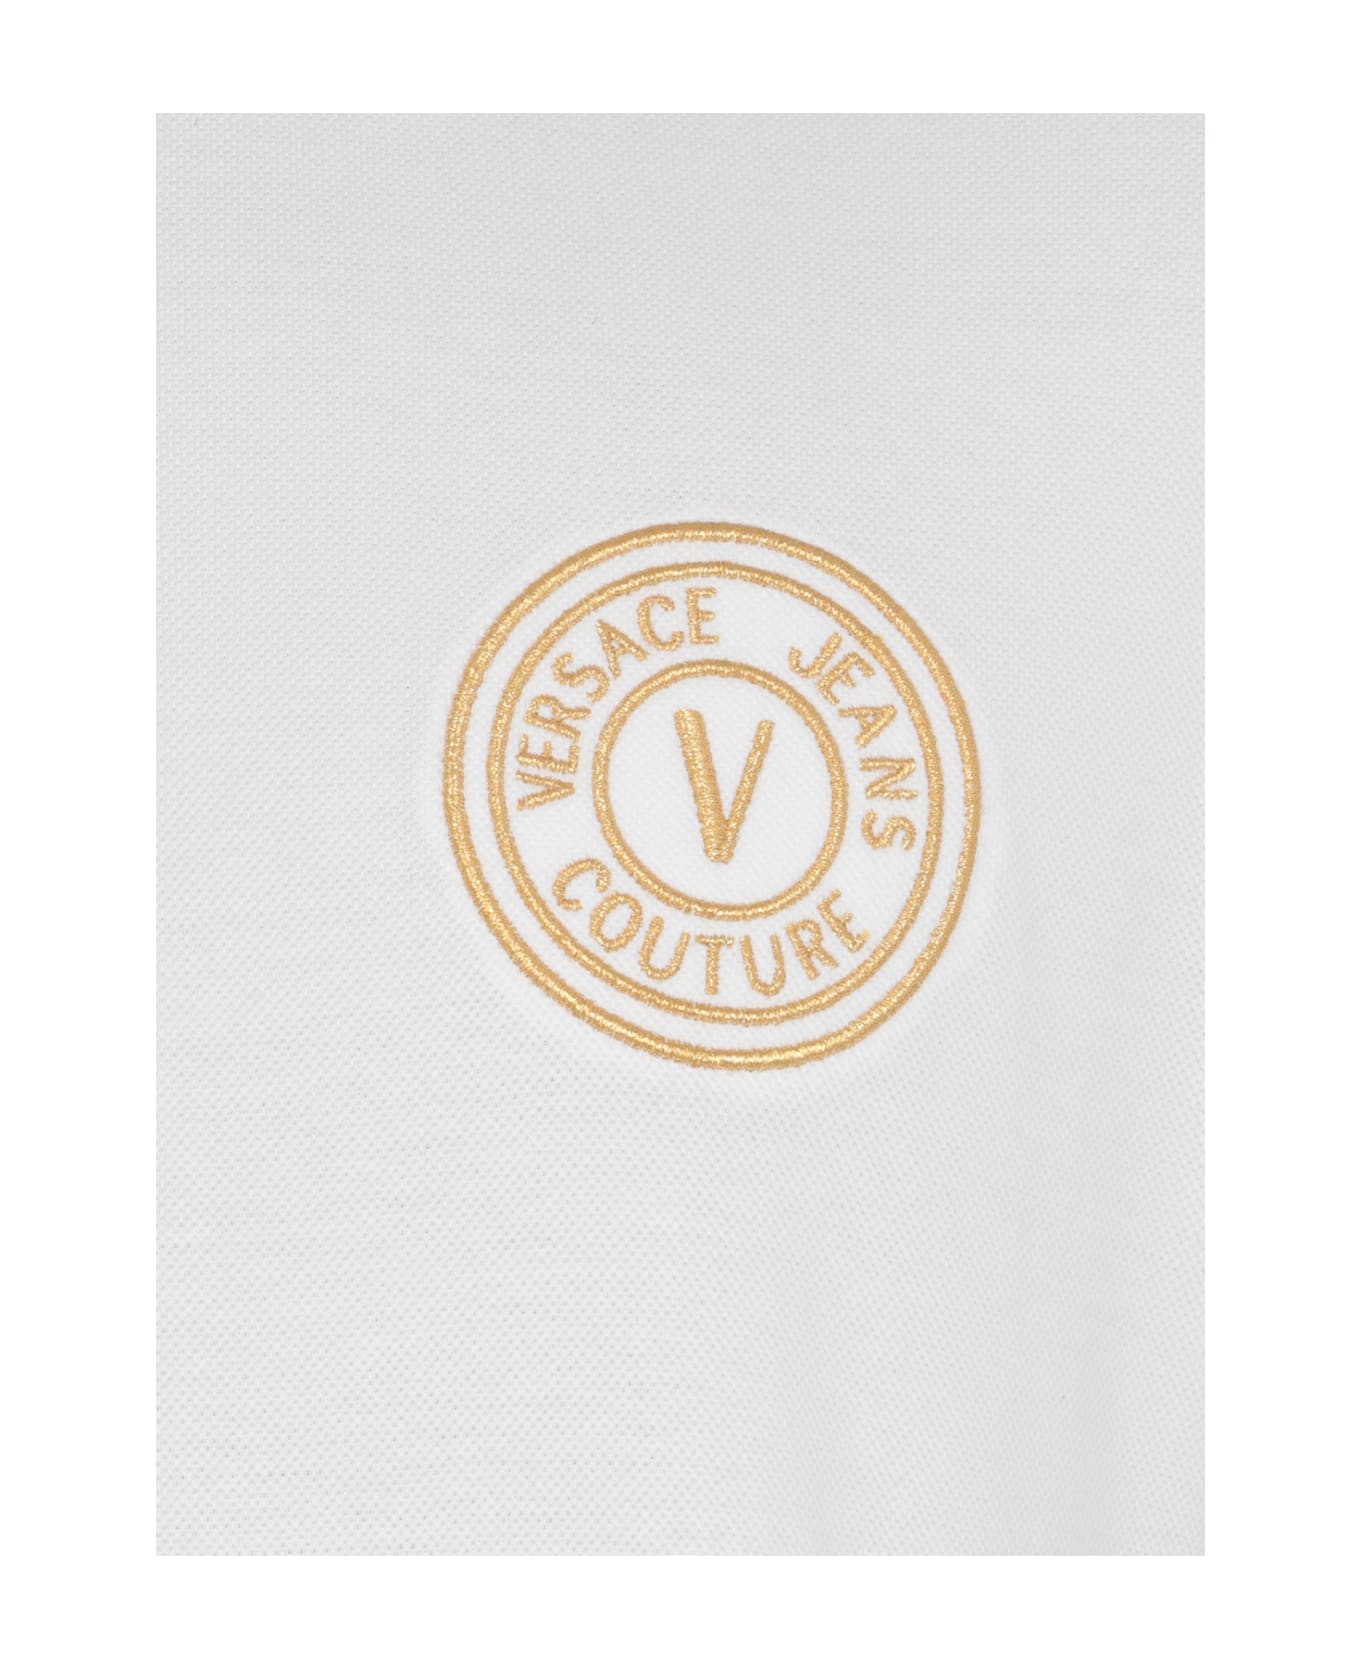 Versace Jeans Couture Stripe Trim Chest Logo Regular Polo Shirt - White